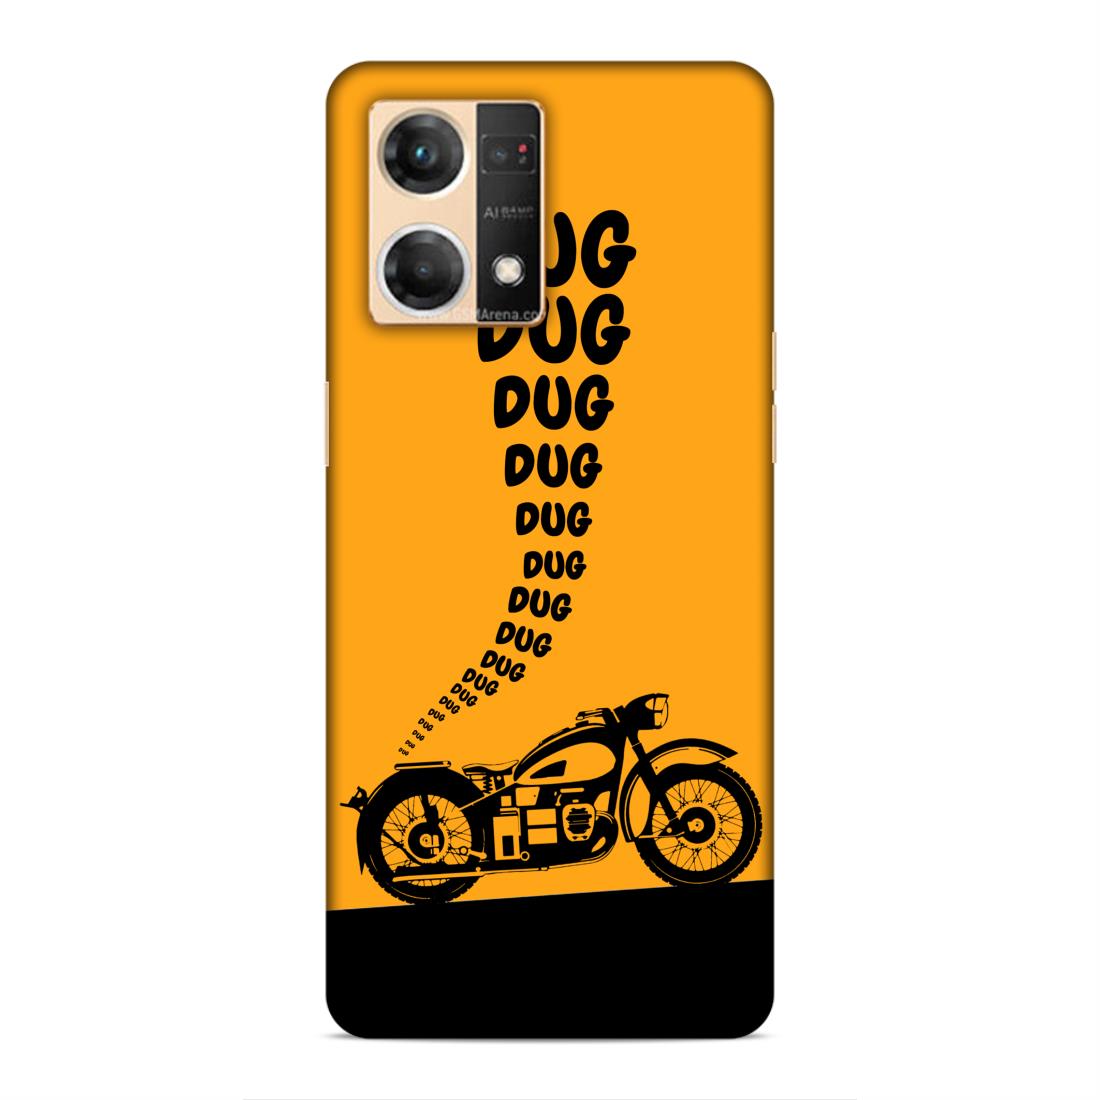 Dug Dug Motor Cycle Hard Back Case For Oppo F21 Pro / F21s Pro